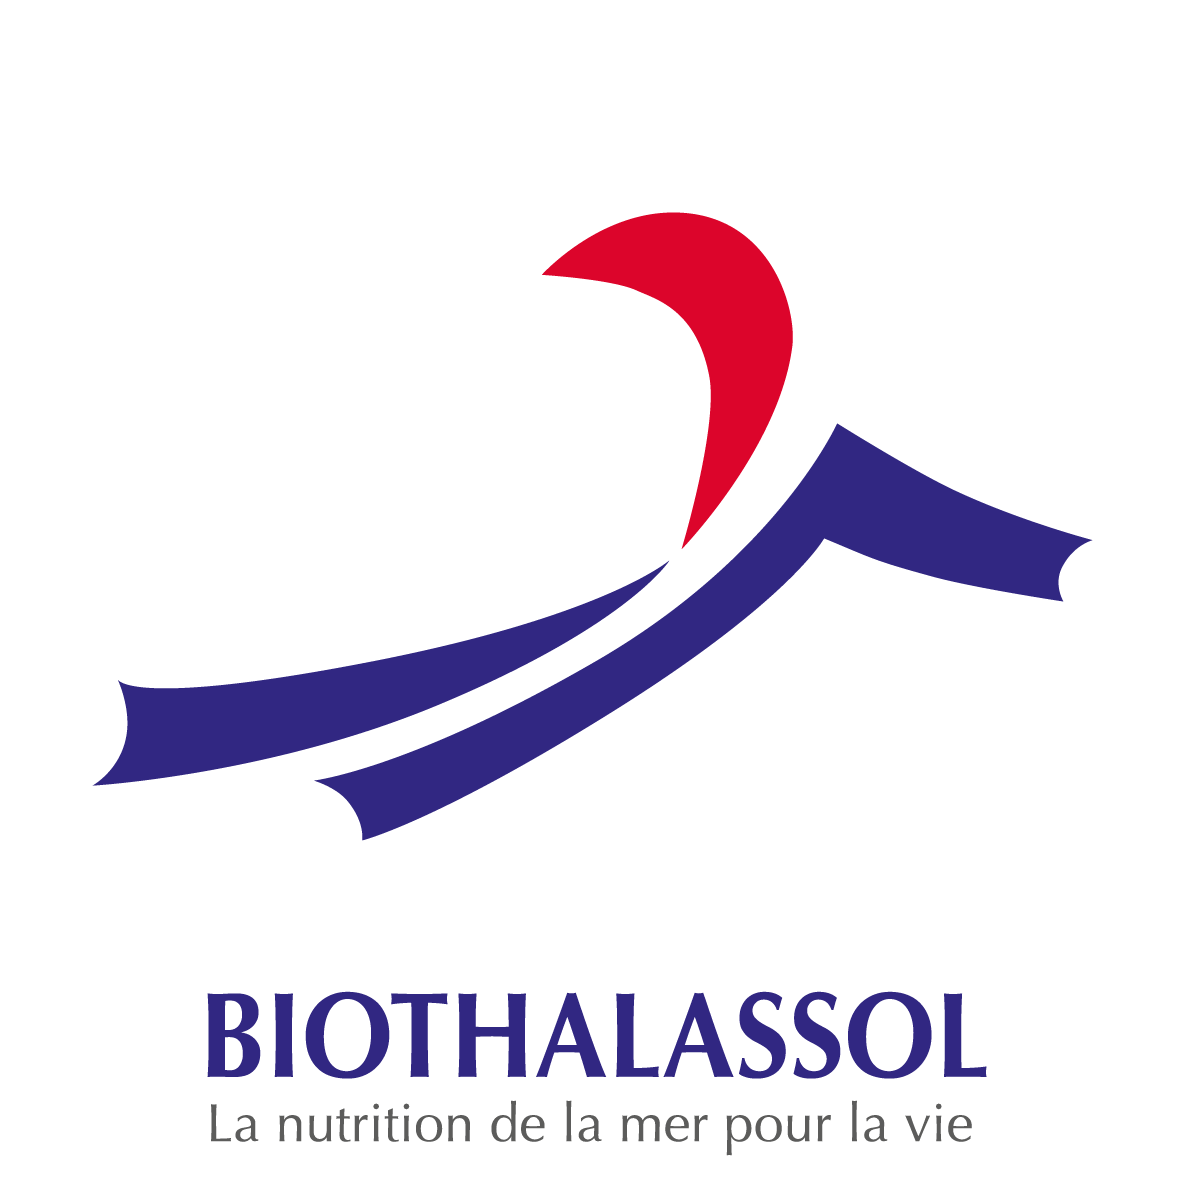 Biothalassol